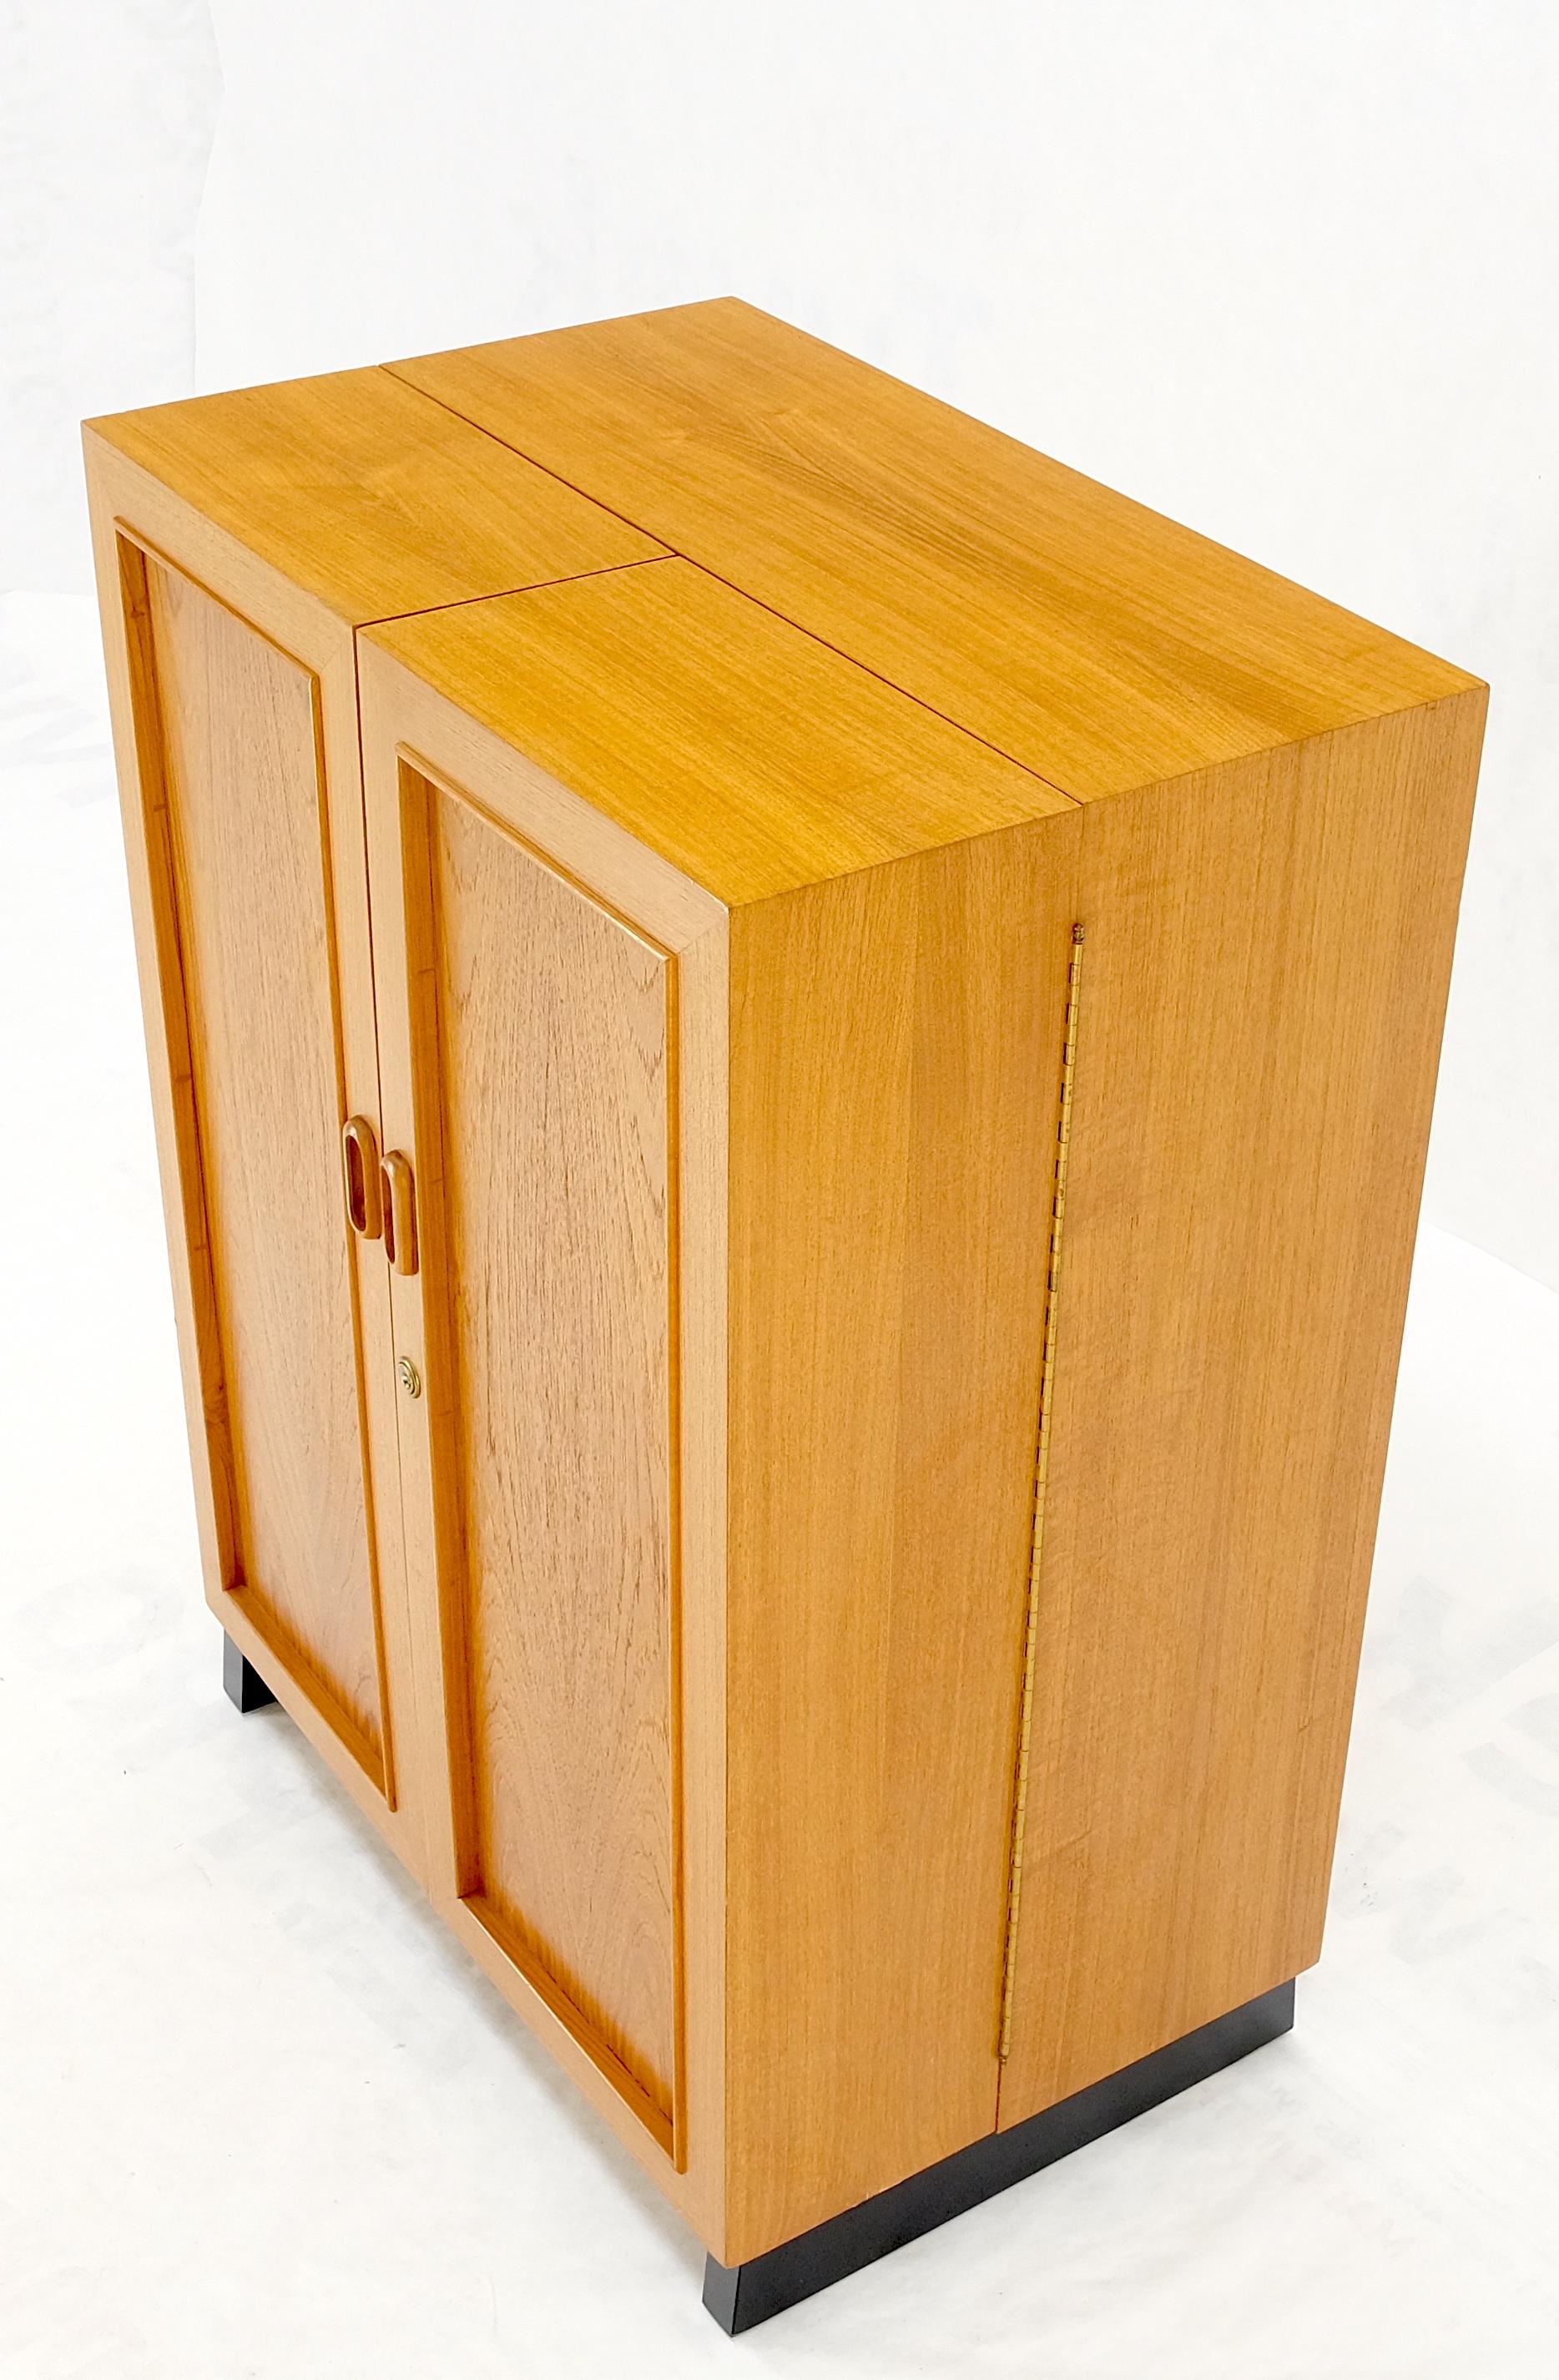 Danish Mid-Century Modern teak box wooton desk table file cabinet organizer mint!
 